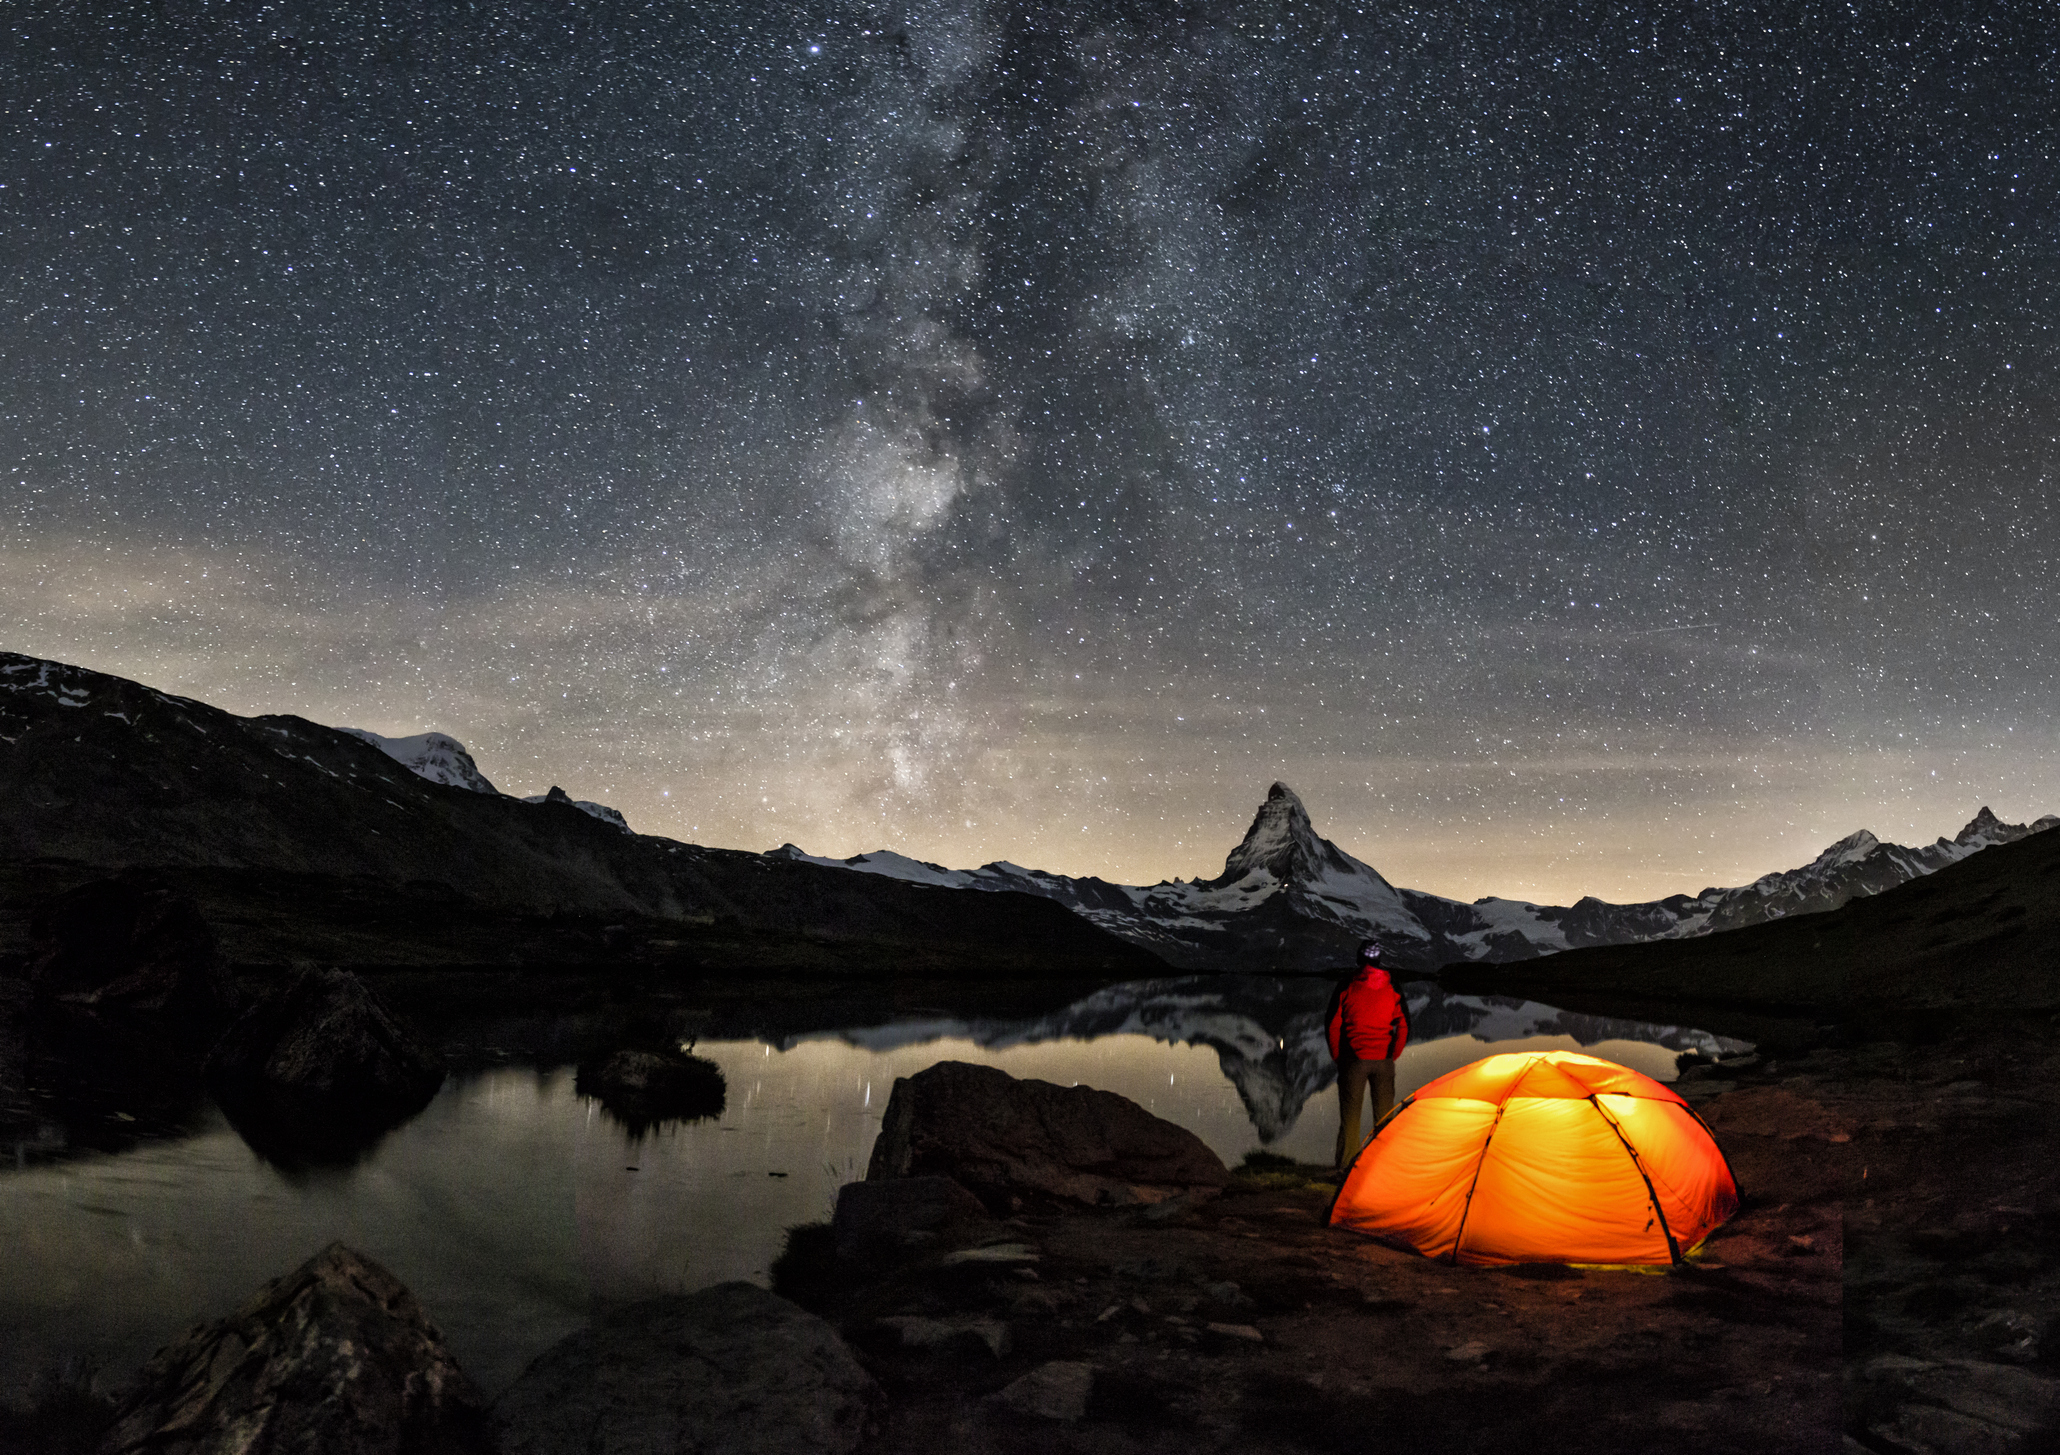 Loneley Camper under Milky Way at Matterhorn